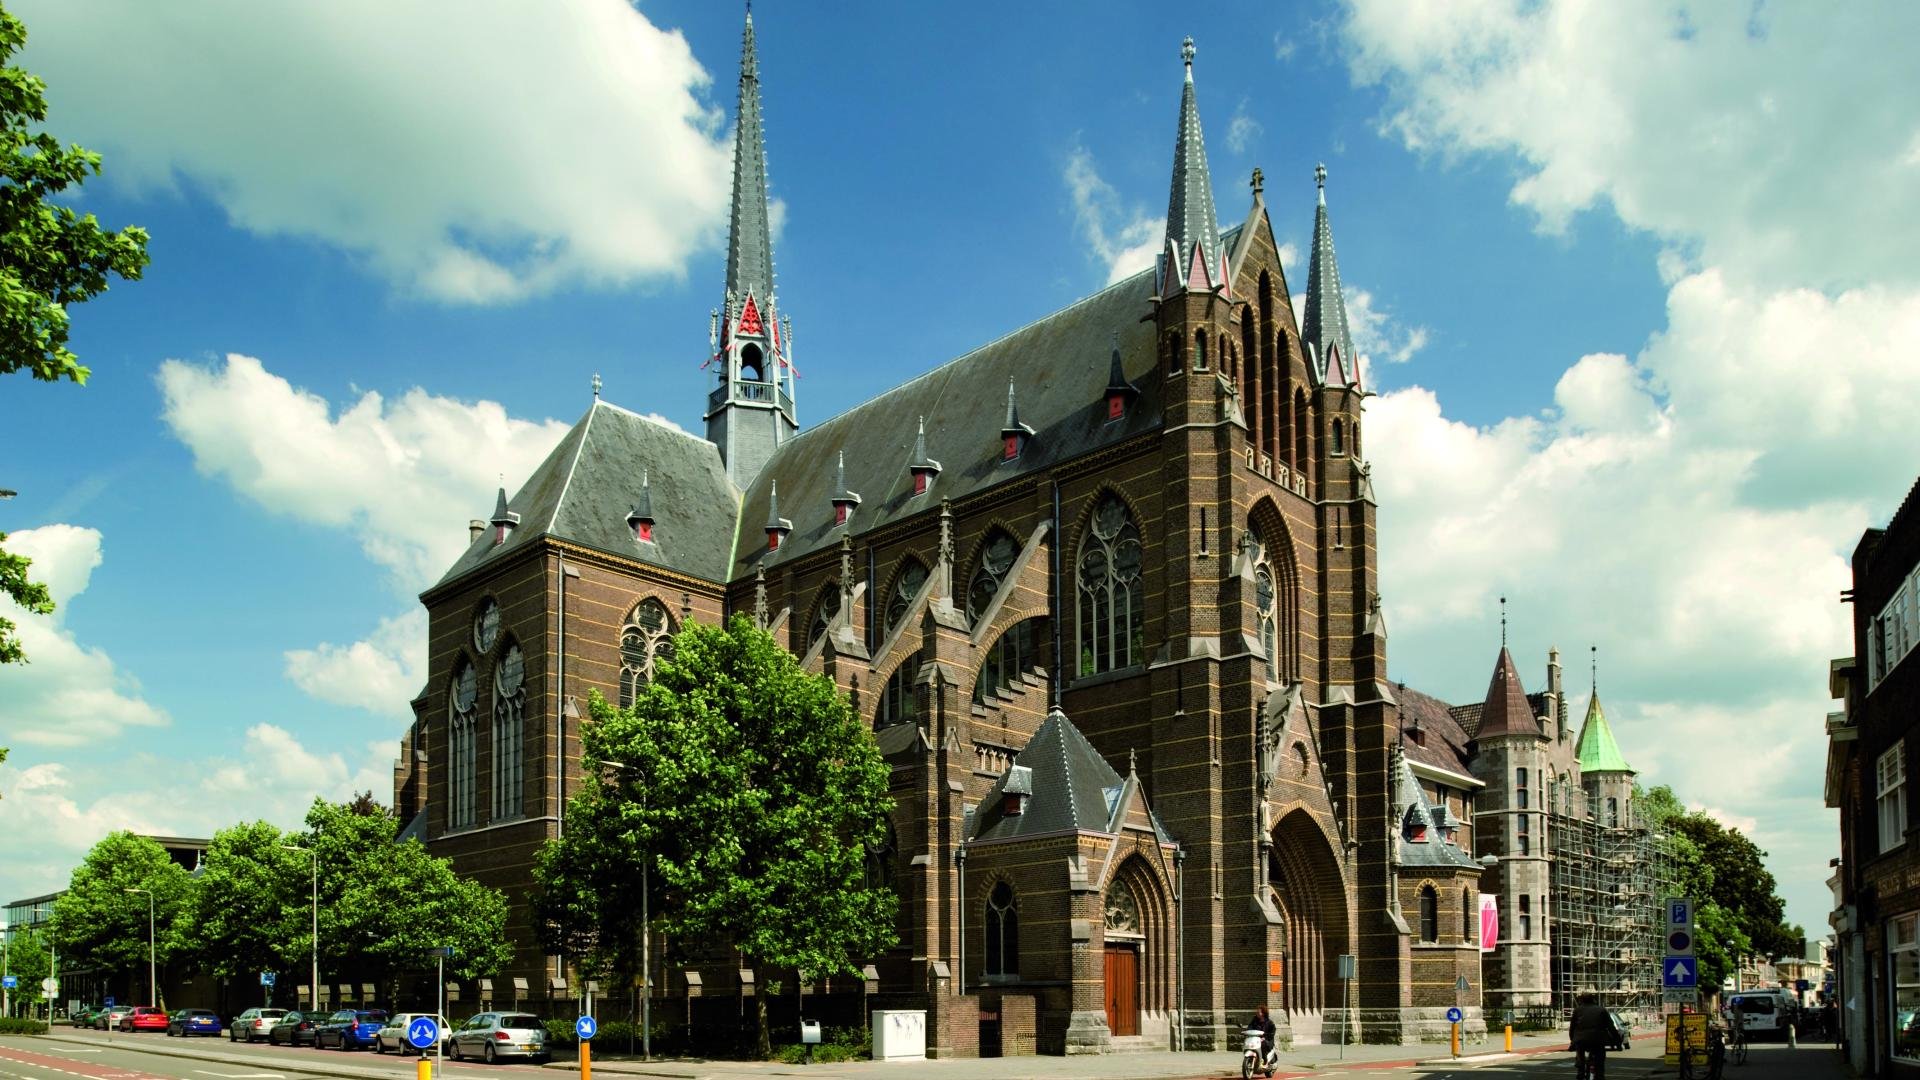 Dominicanenkerk Zwolle